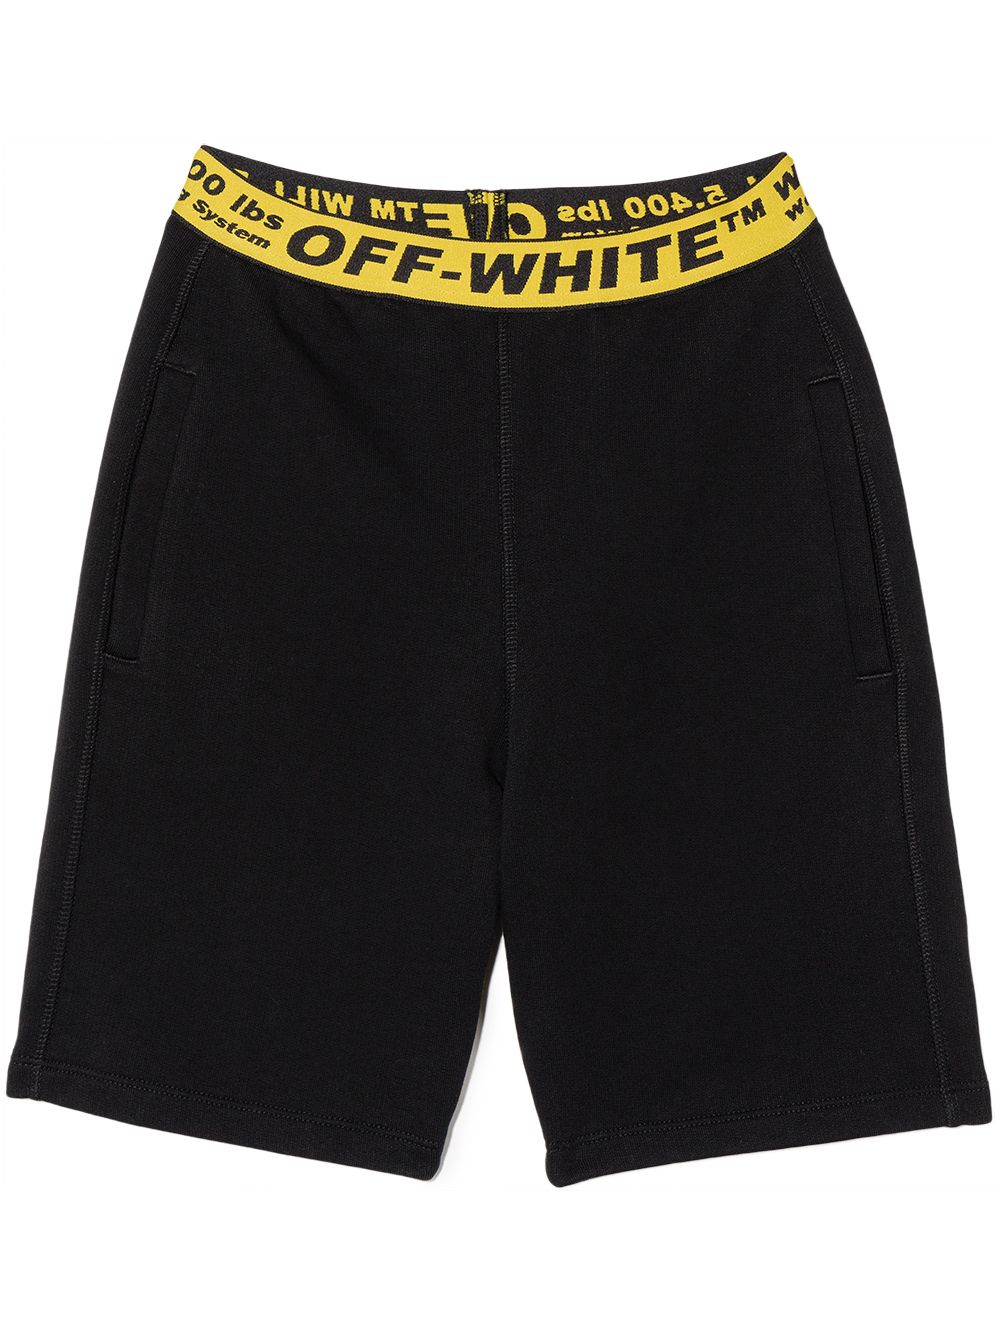 OFF-WHITE LOGO裤腰短裤